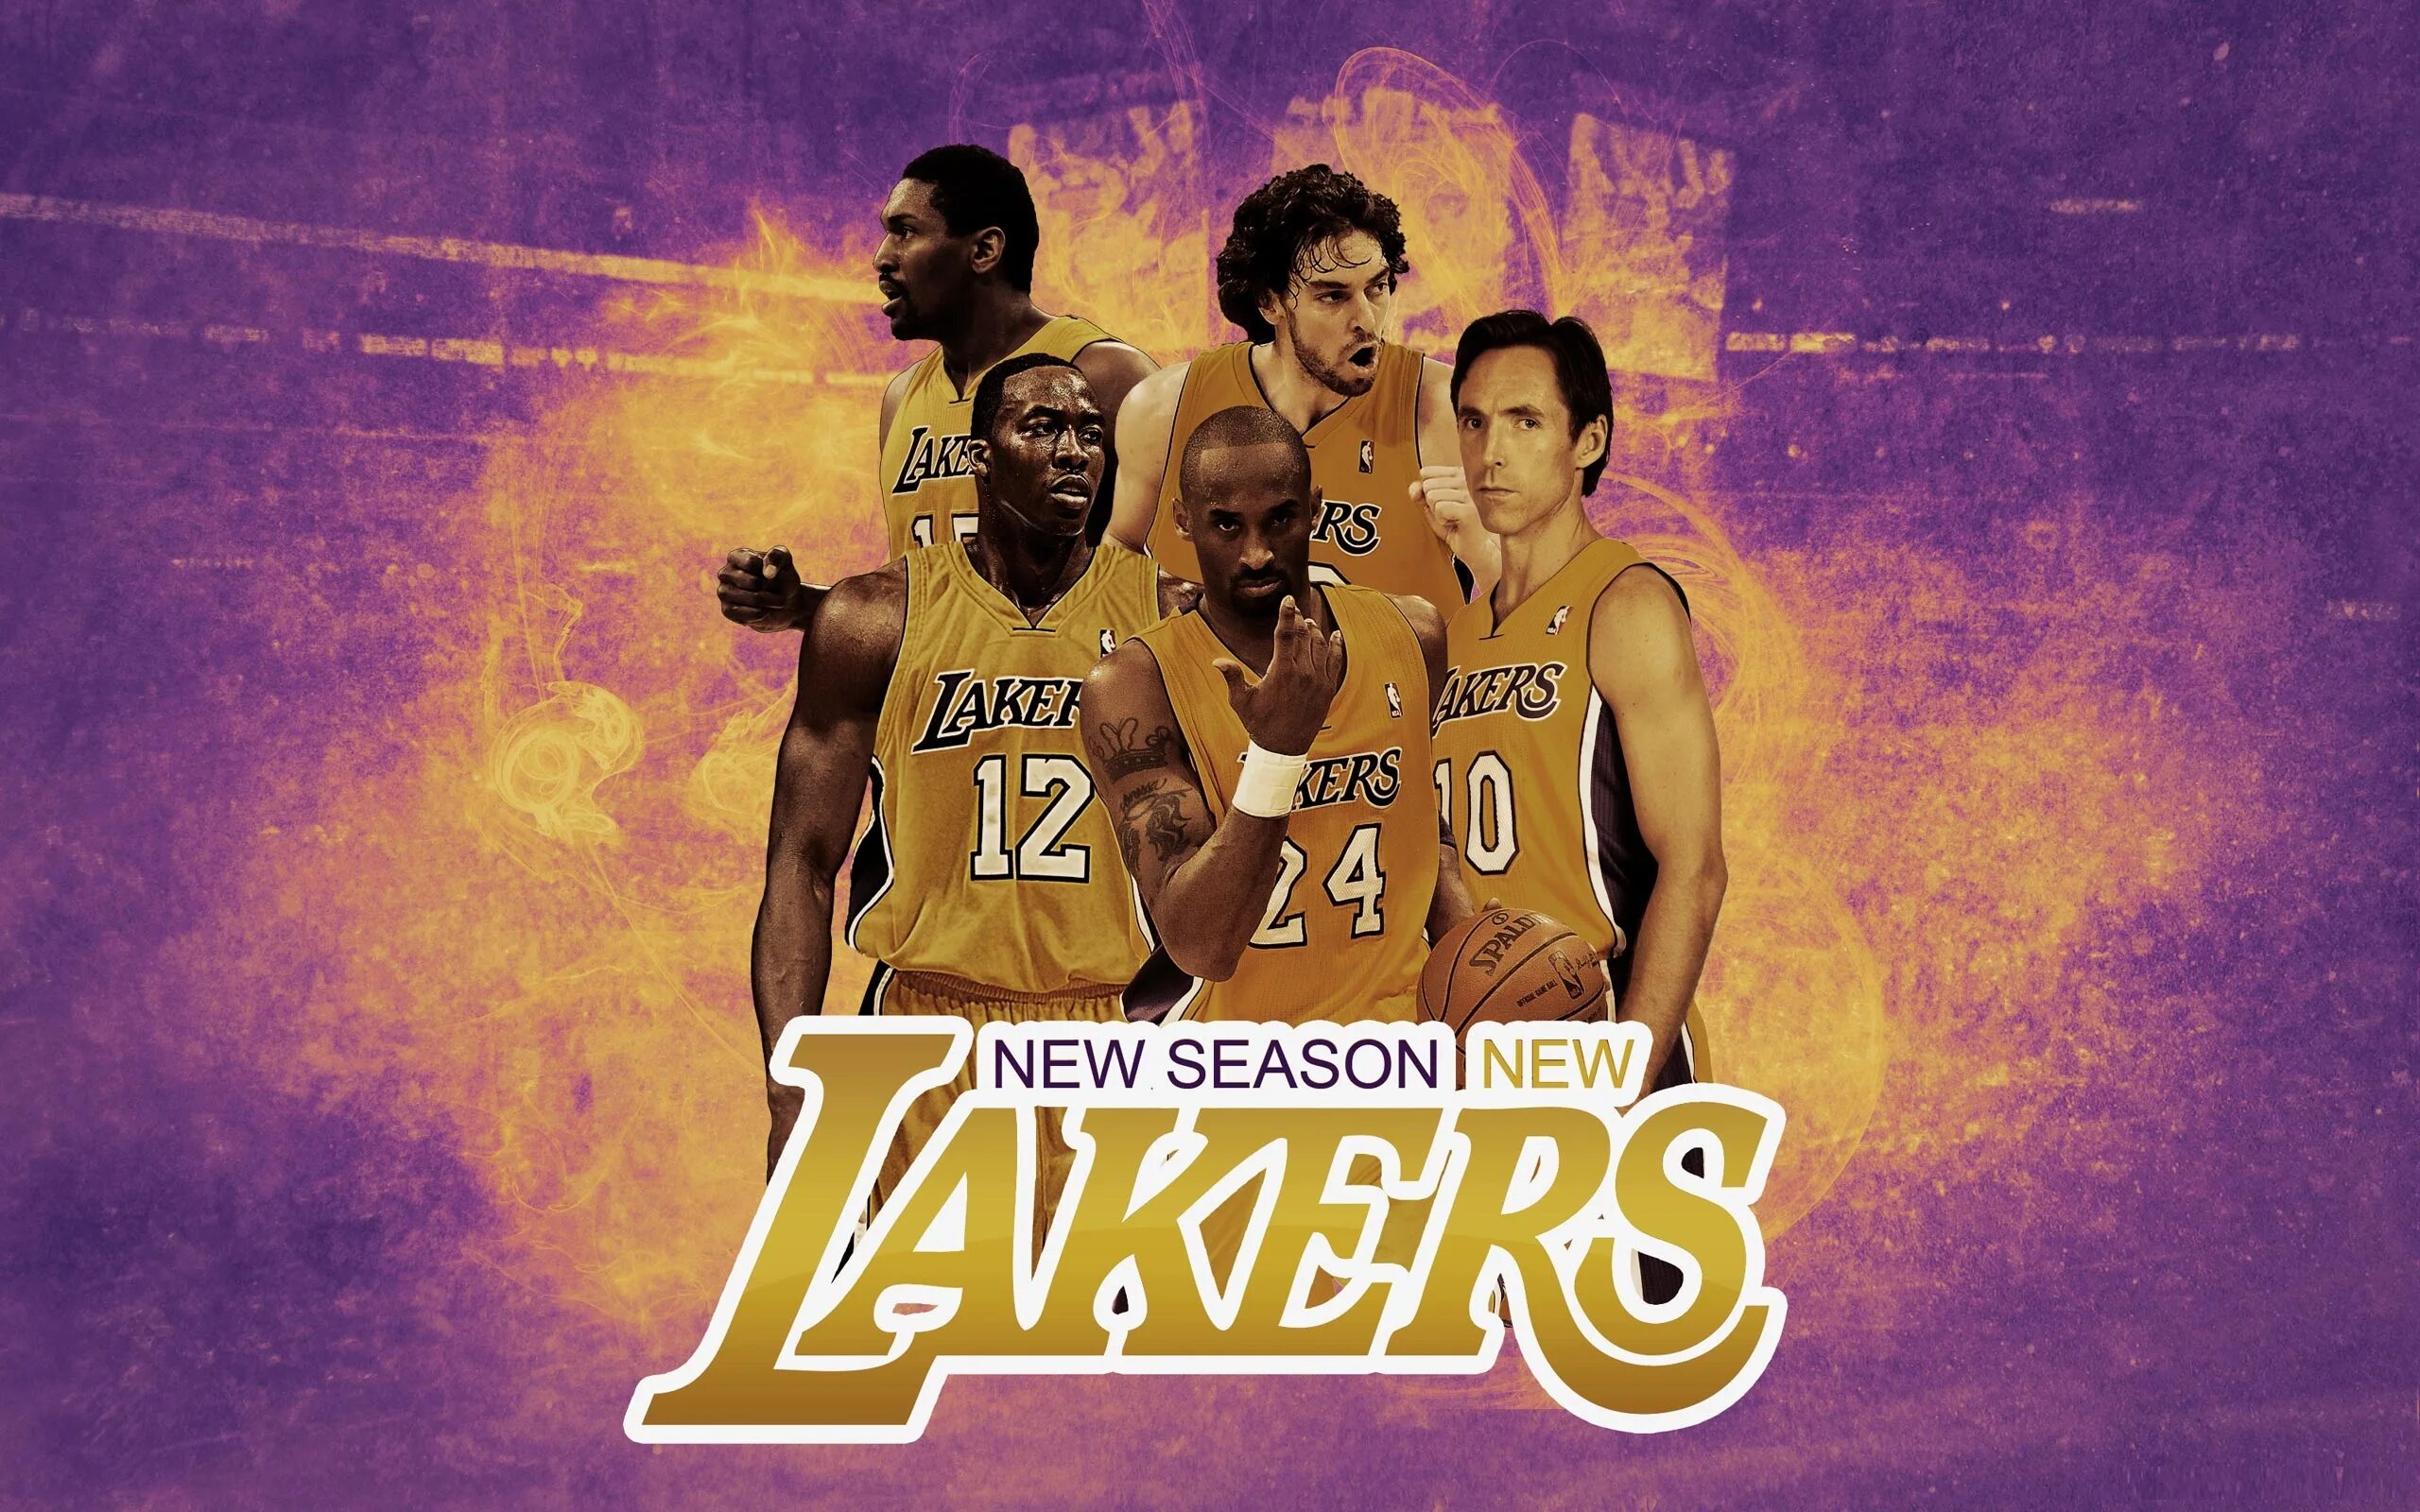 La lakers. Баскетбольный клуб Лос-Анджелес Лейкерс. Лос-Анджелес Лейкерс команда 1990. Команда Лос Анджелес Лейкерс. Lakers 75.